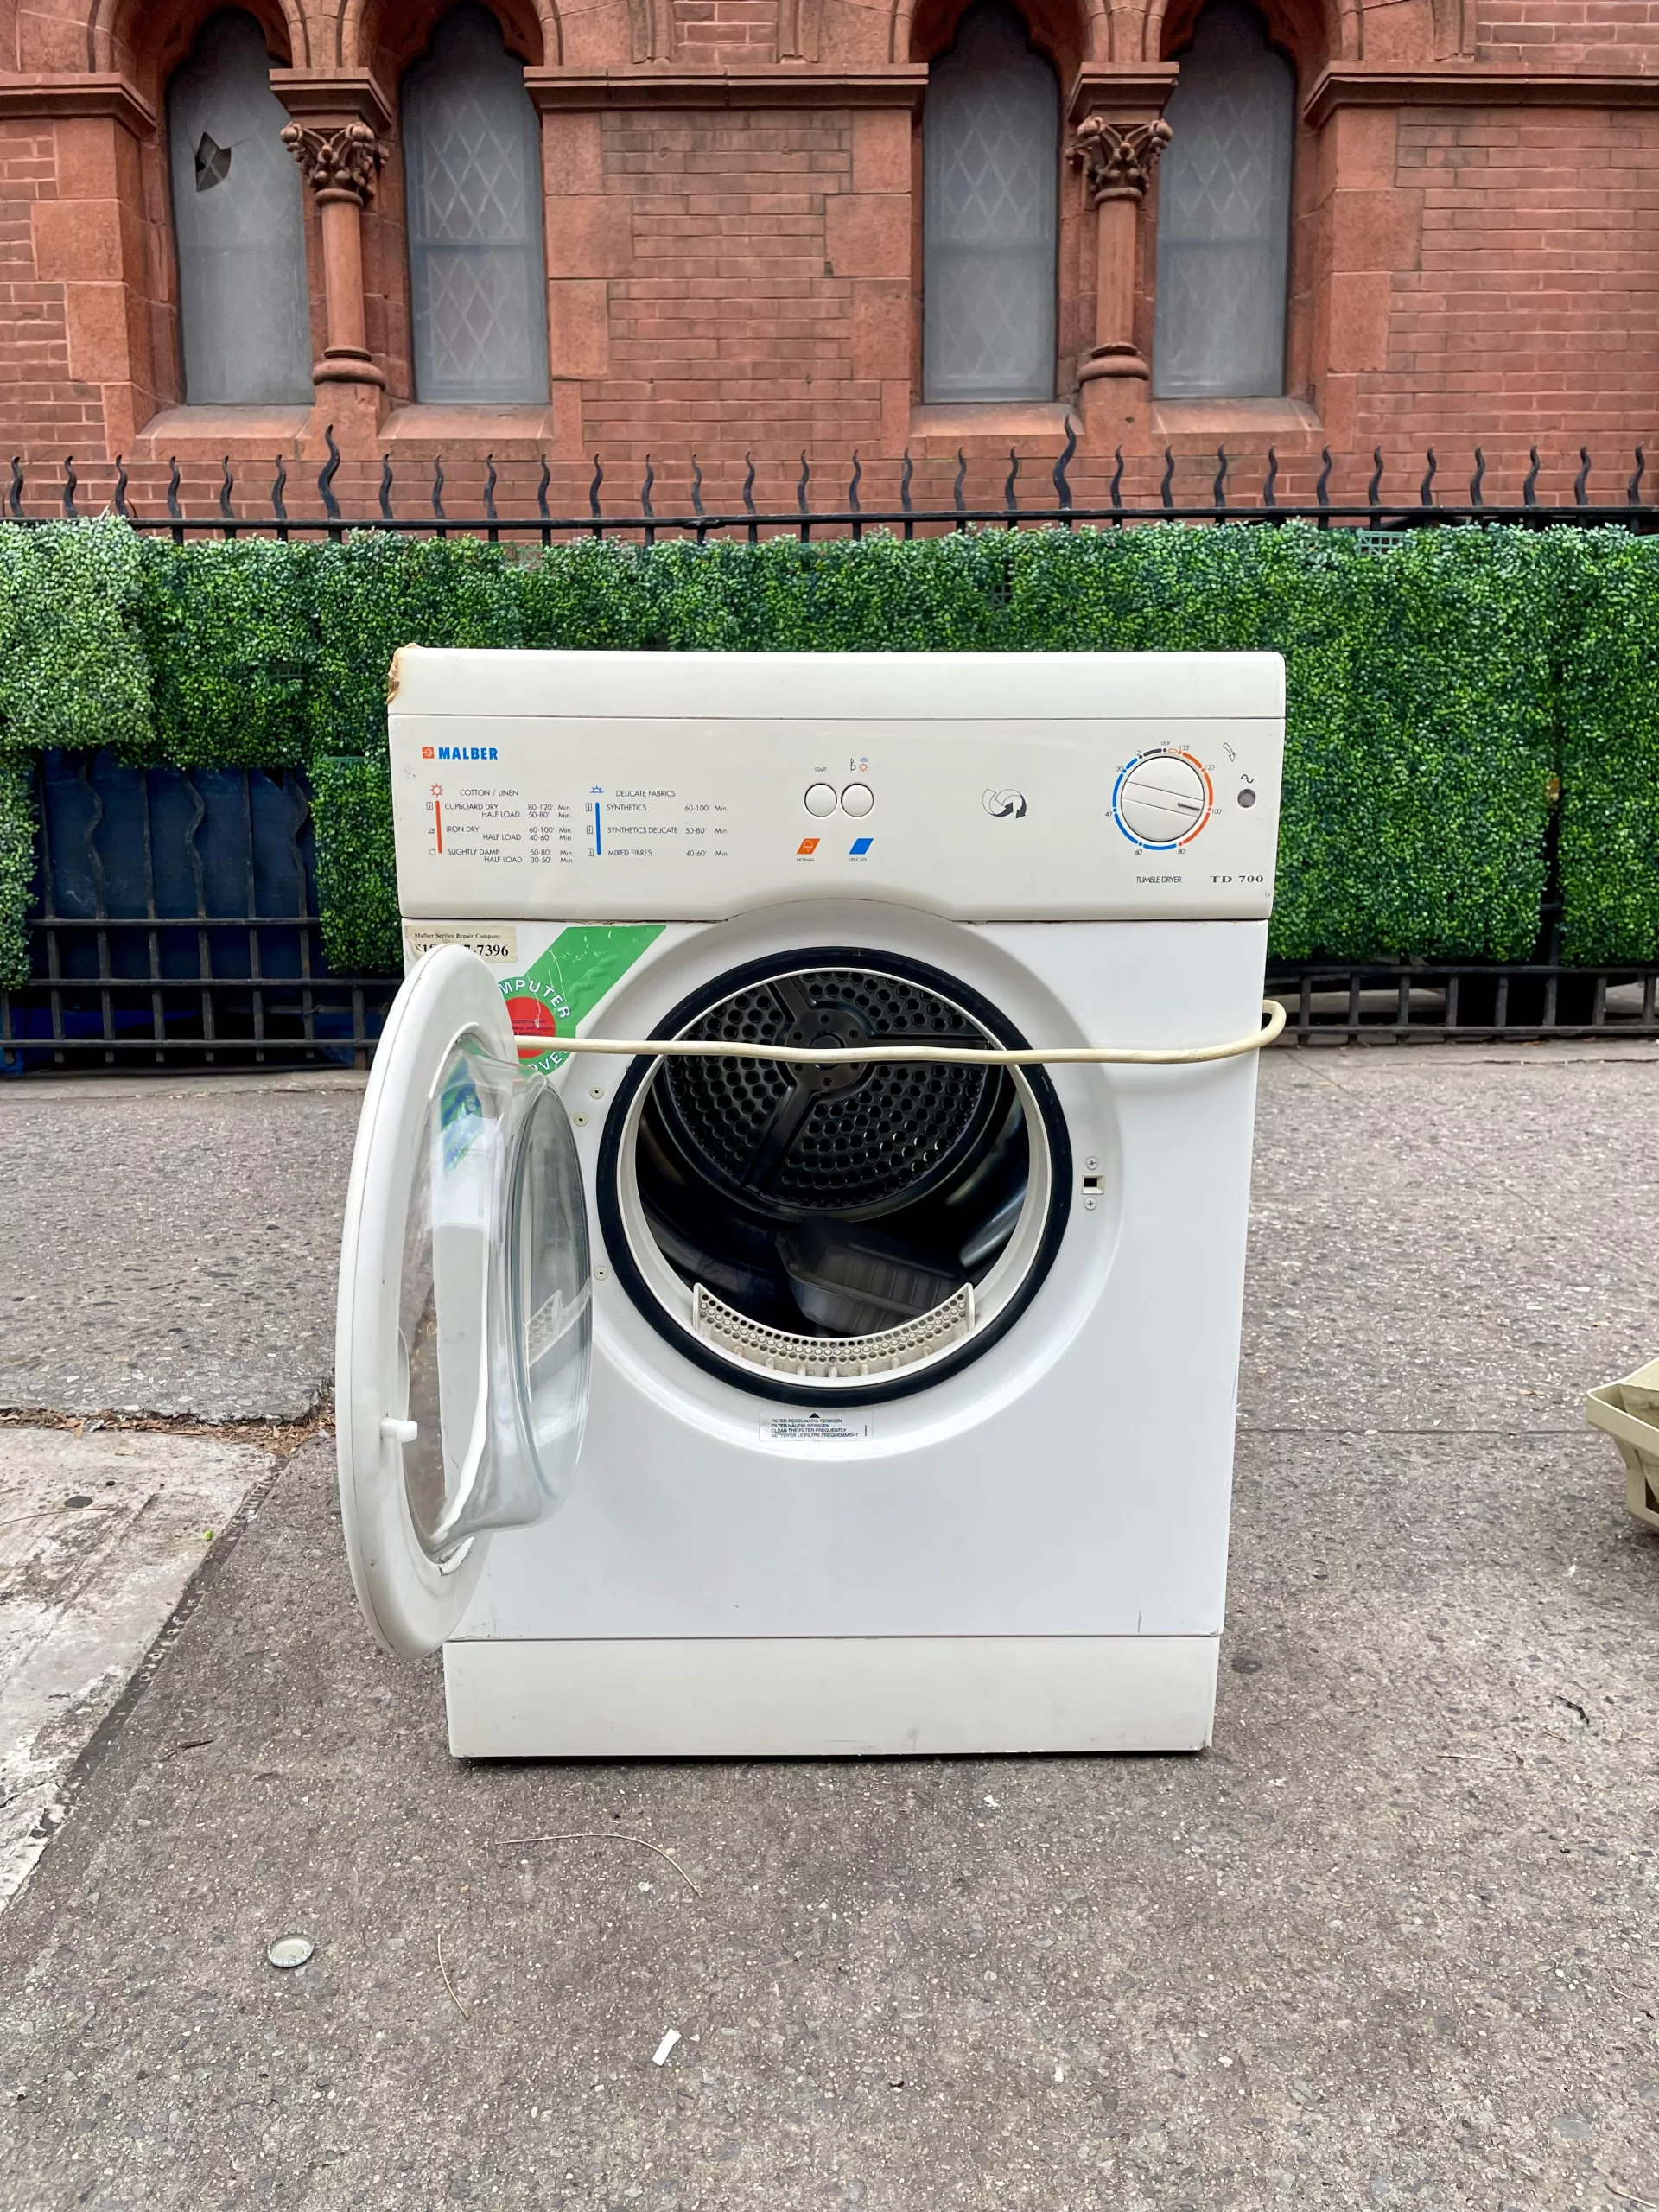 Abandoned washing machine on a New York City sidewalk.